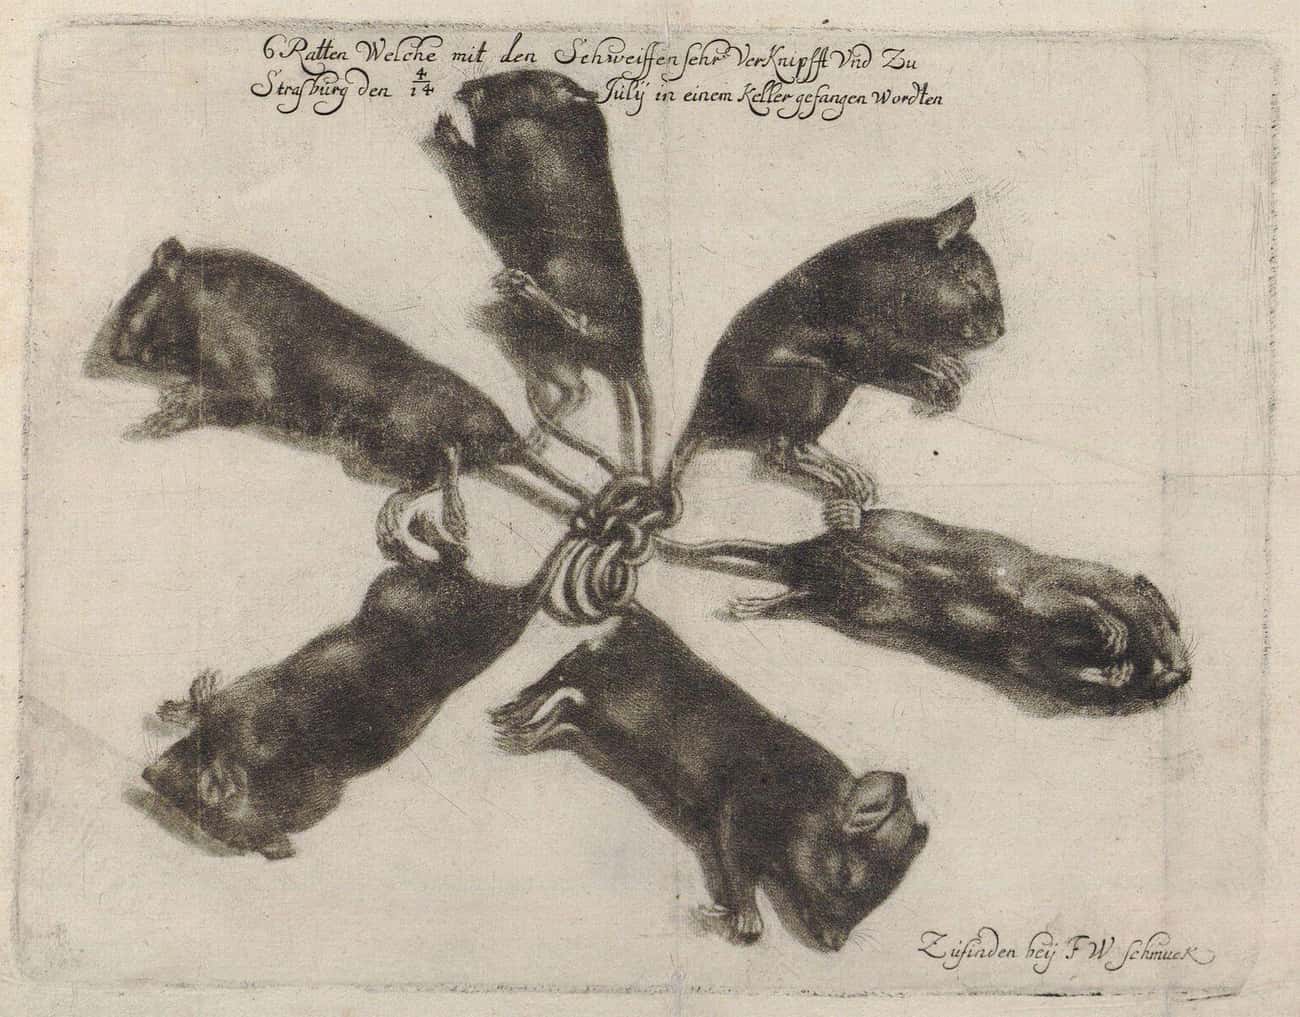 The Idea Of Rat Kings Originated In Eastern Europe